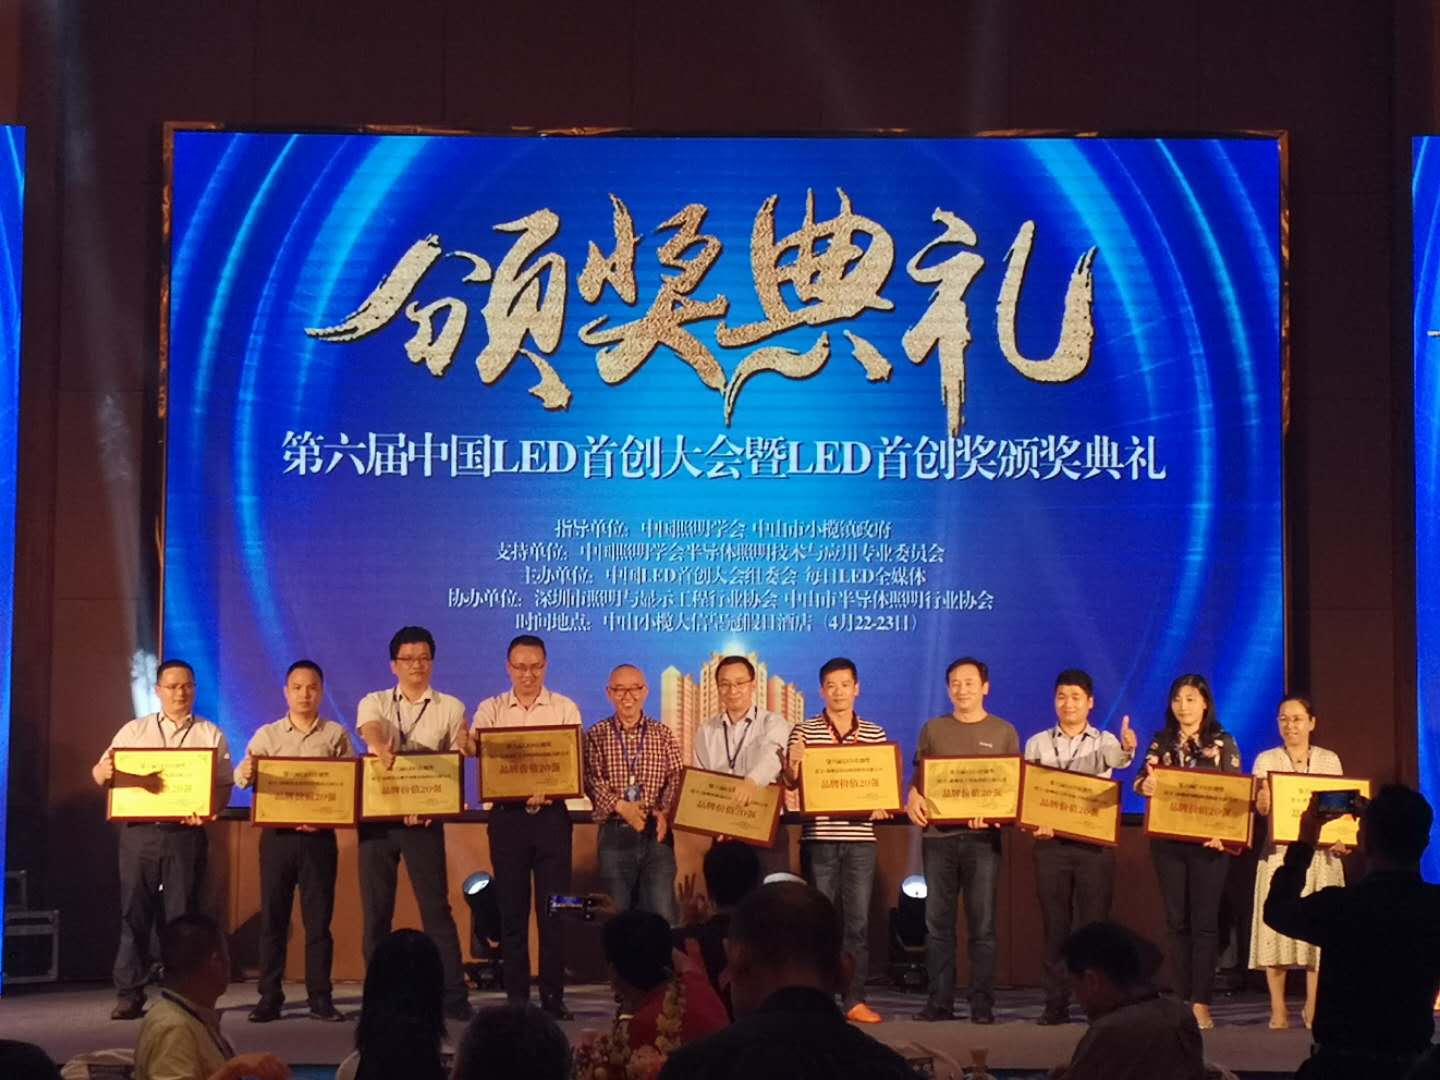 Originality Quality casting brand - Lepower Shares won the 6th China LED Initiative Award 